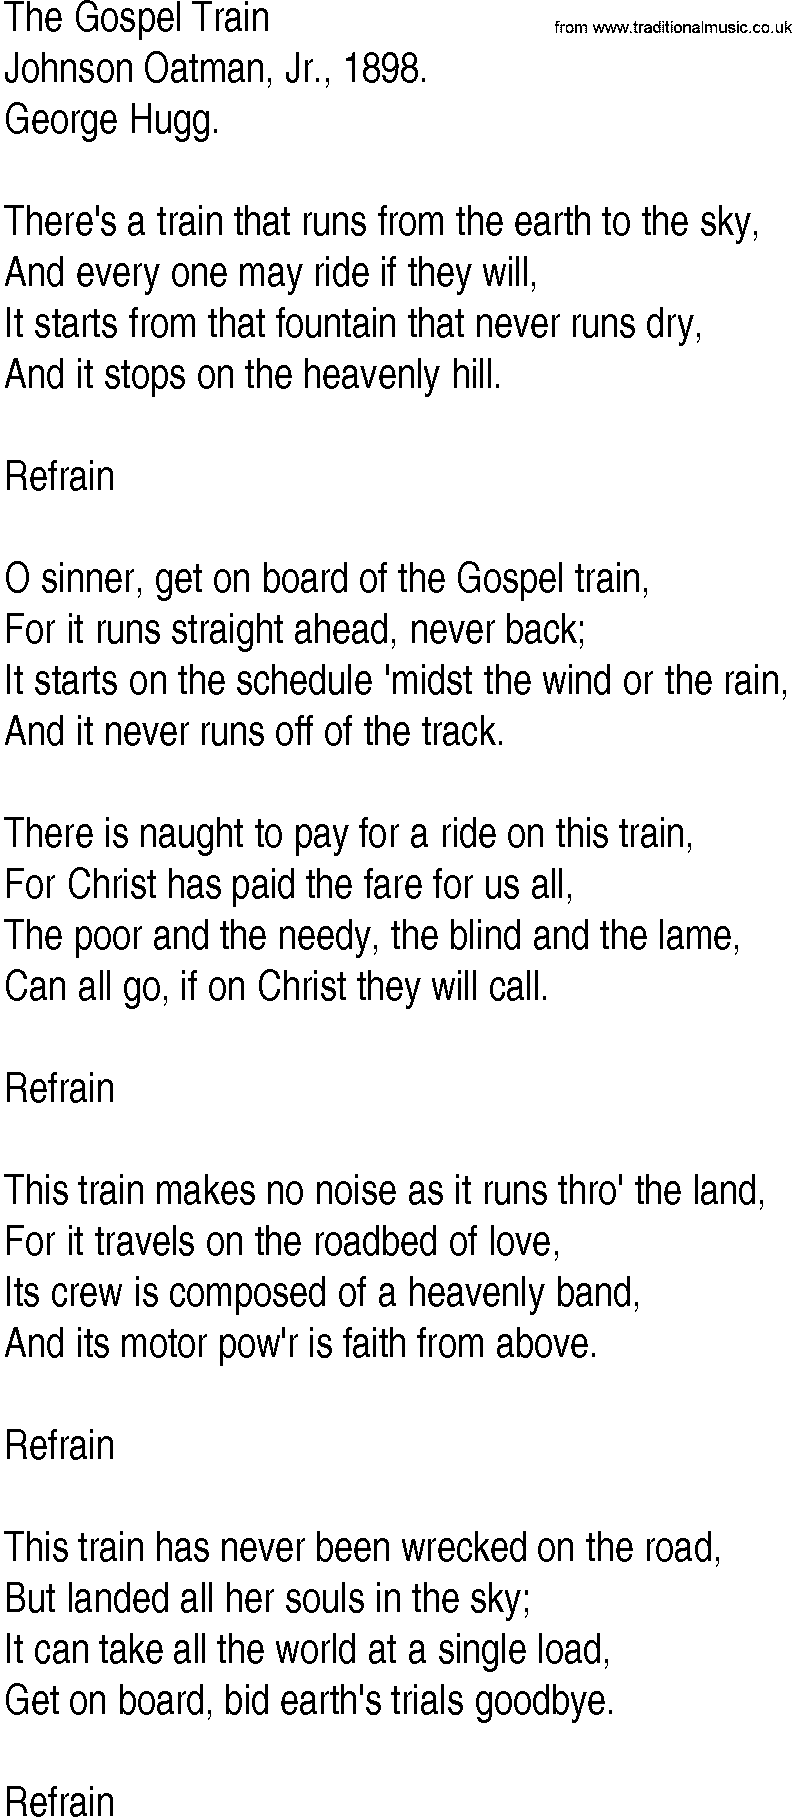 Hymn and Gospel Song: The Gospel Train by Johnson Oatman Jr lyrics